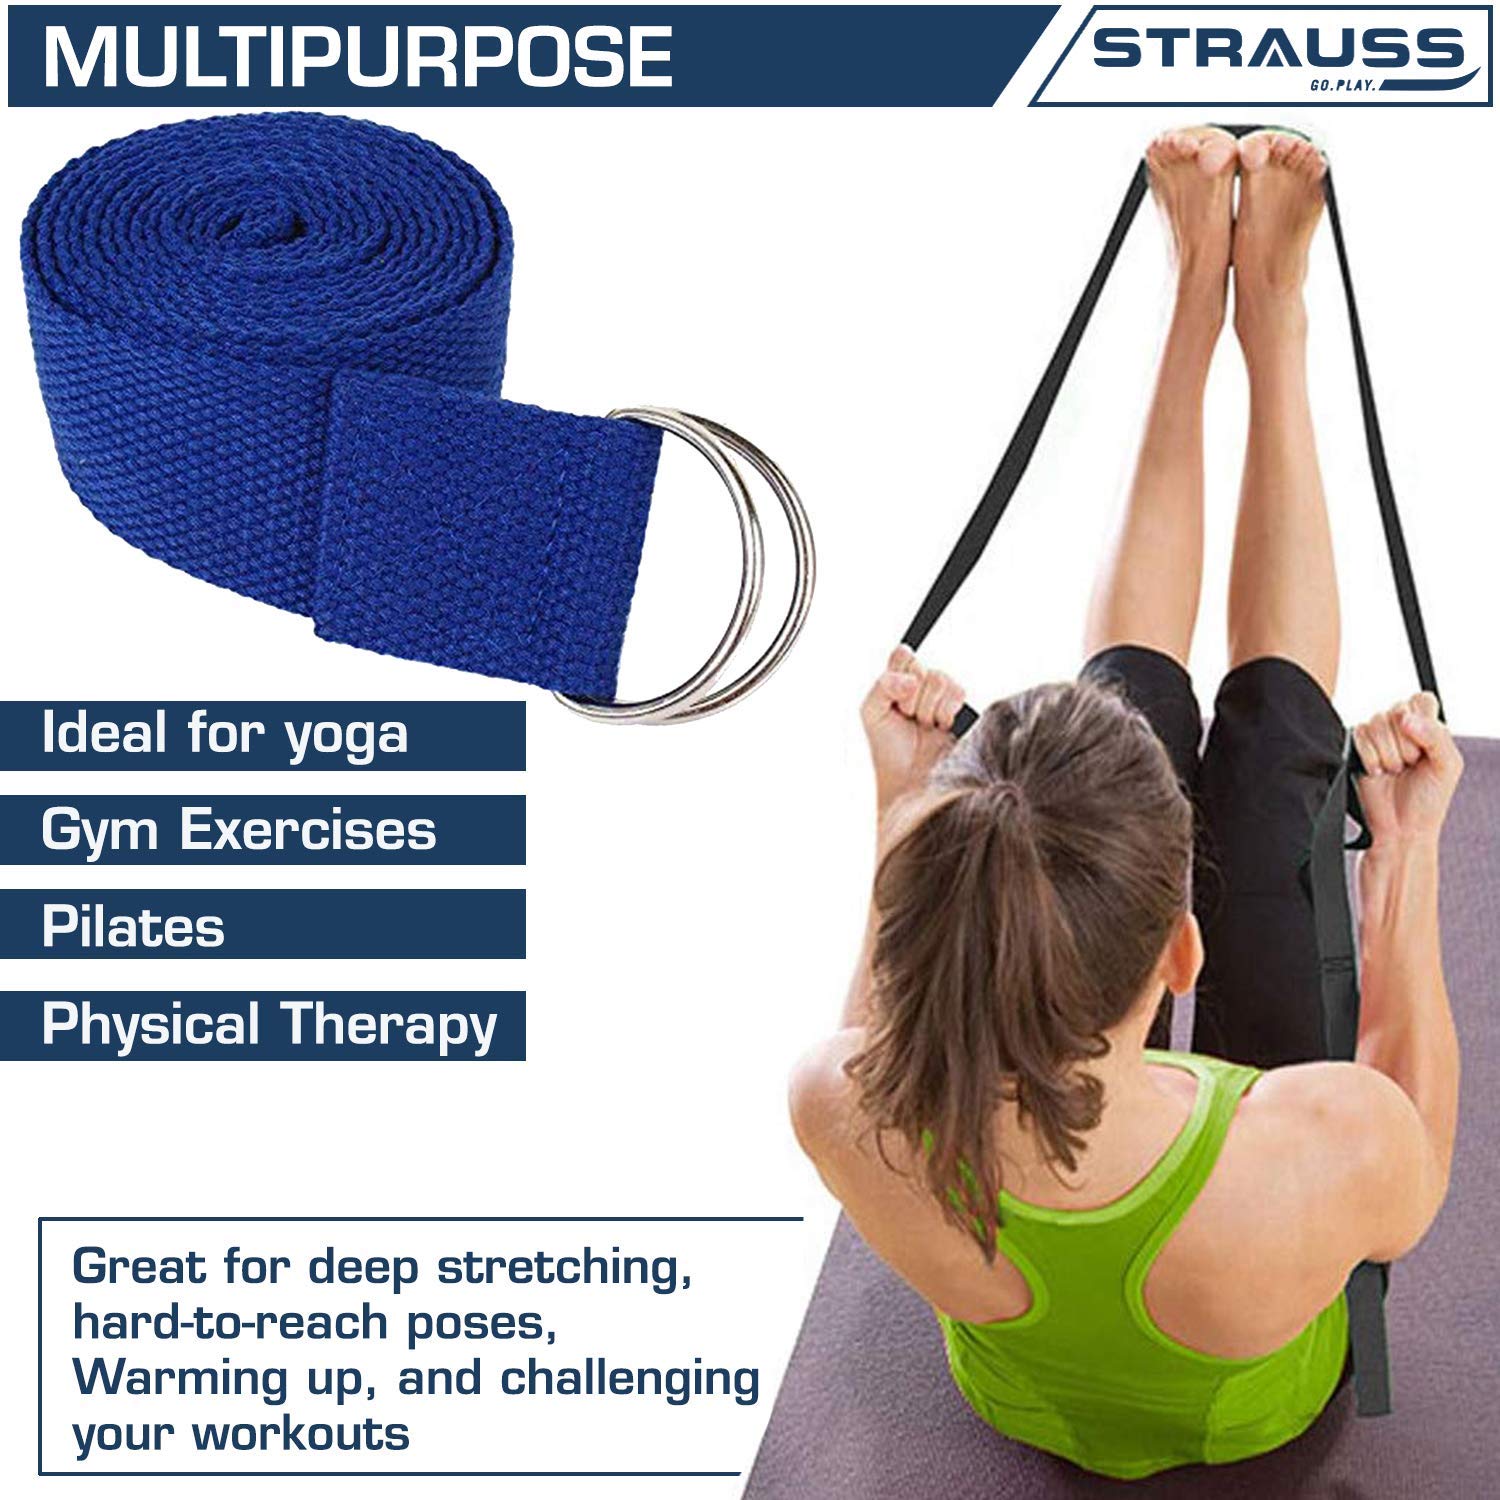 Strauss Yoga Belt Yoga Strap Cotton Yoga Strap Price in India